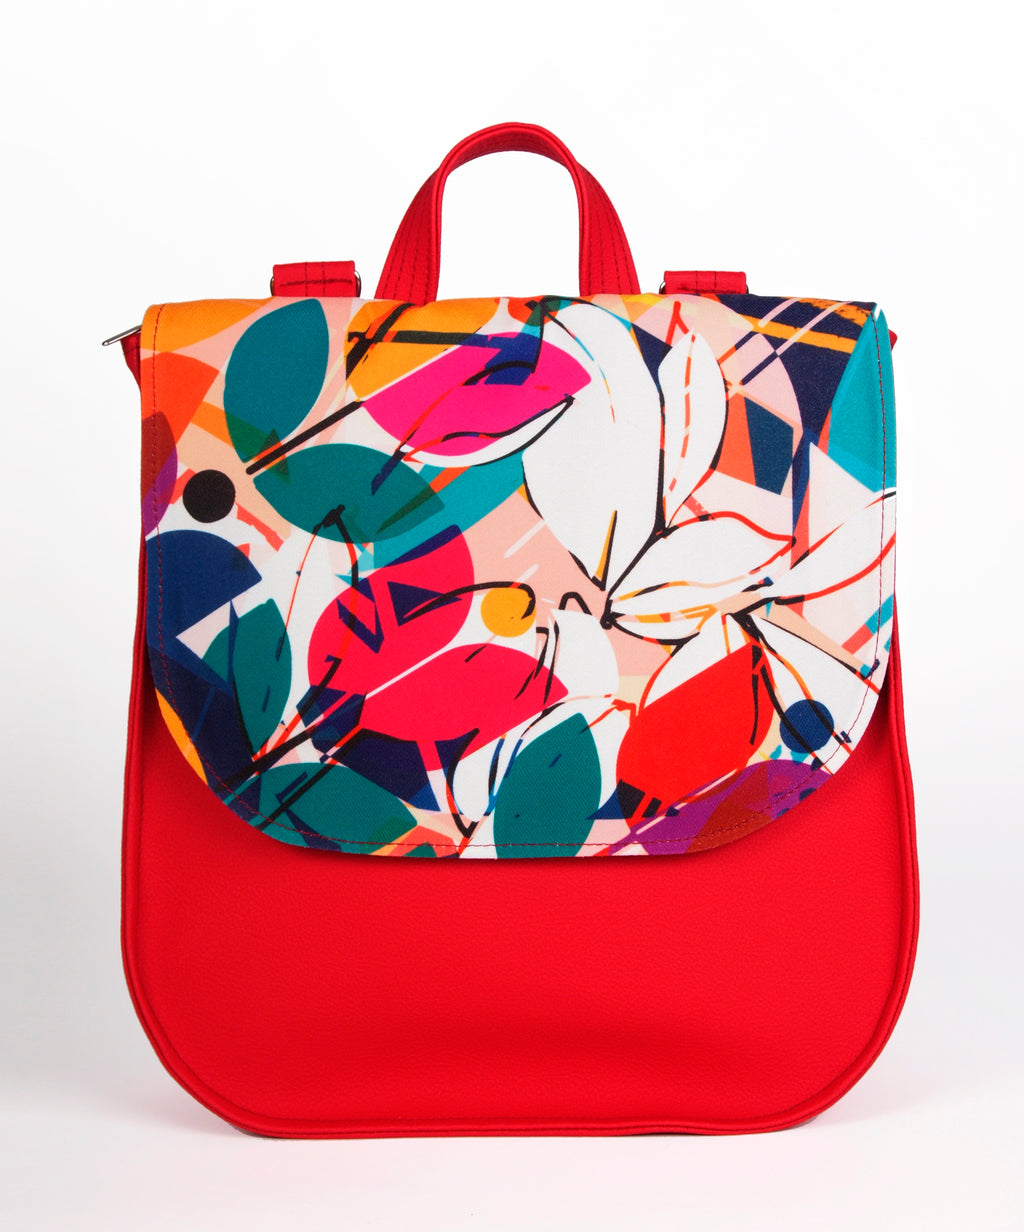 Bardo backpack&bag - Queen of Flowers - Premium bardo backpack&bag from BARDO ART WORKS - Just lvart bag, backpack, bag, black, floral, flowers, gift, green, handemade, messenger, nature, red, urban style, vegan leather, woman85.00! Shop now at BARDO ART WORKS